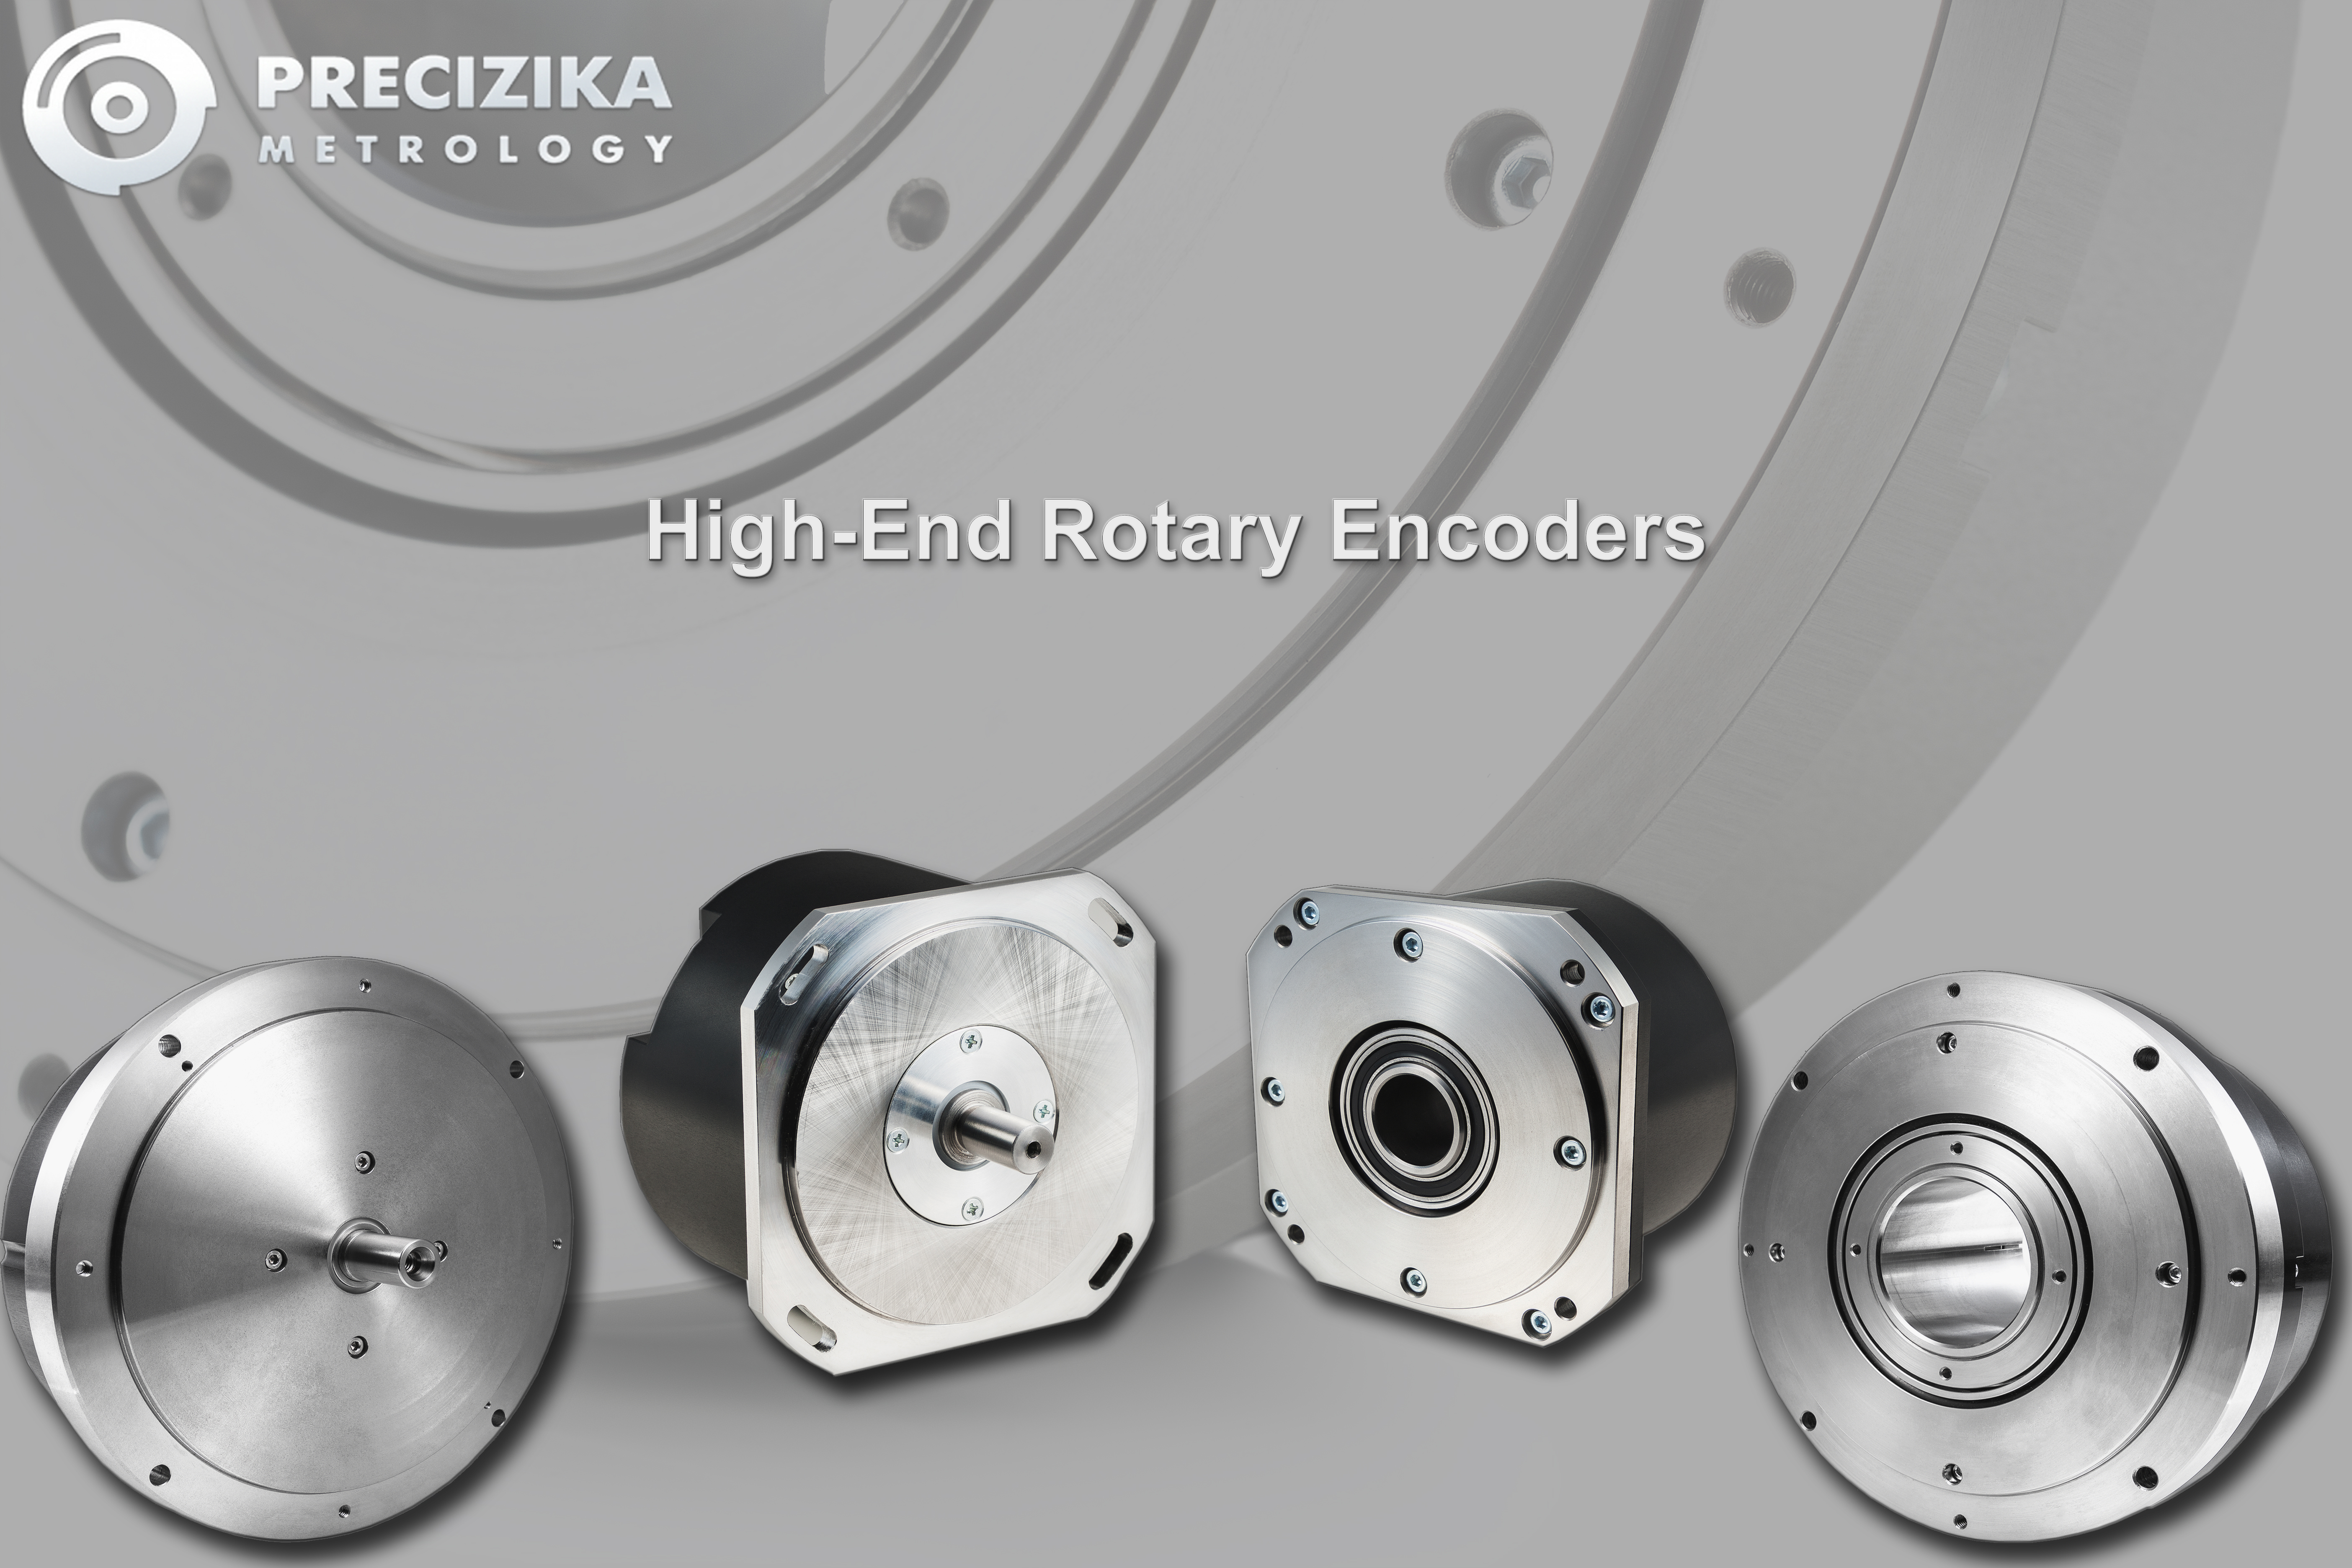 High-End Rotary Encoders